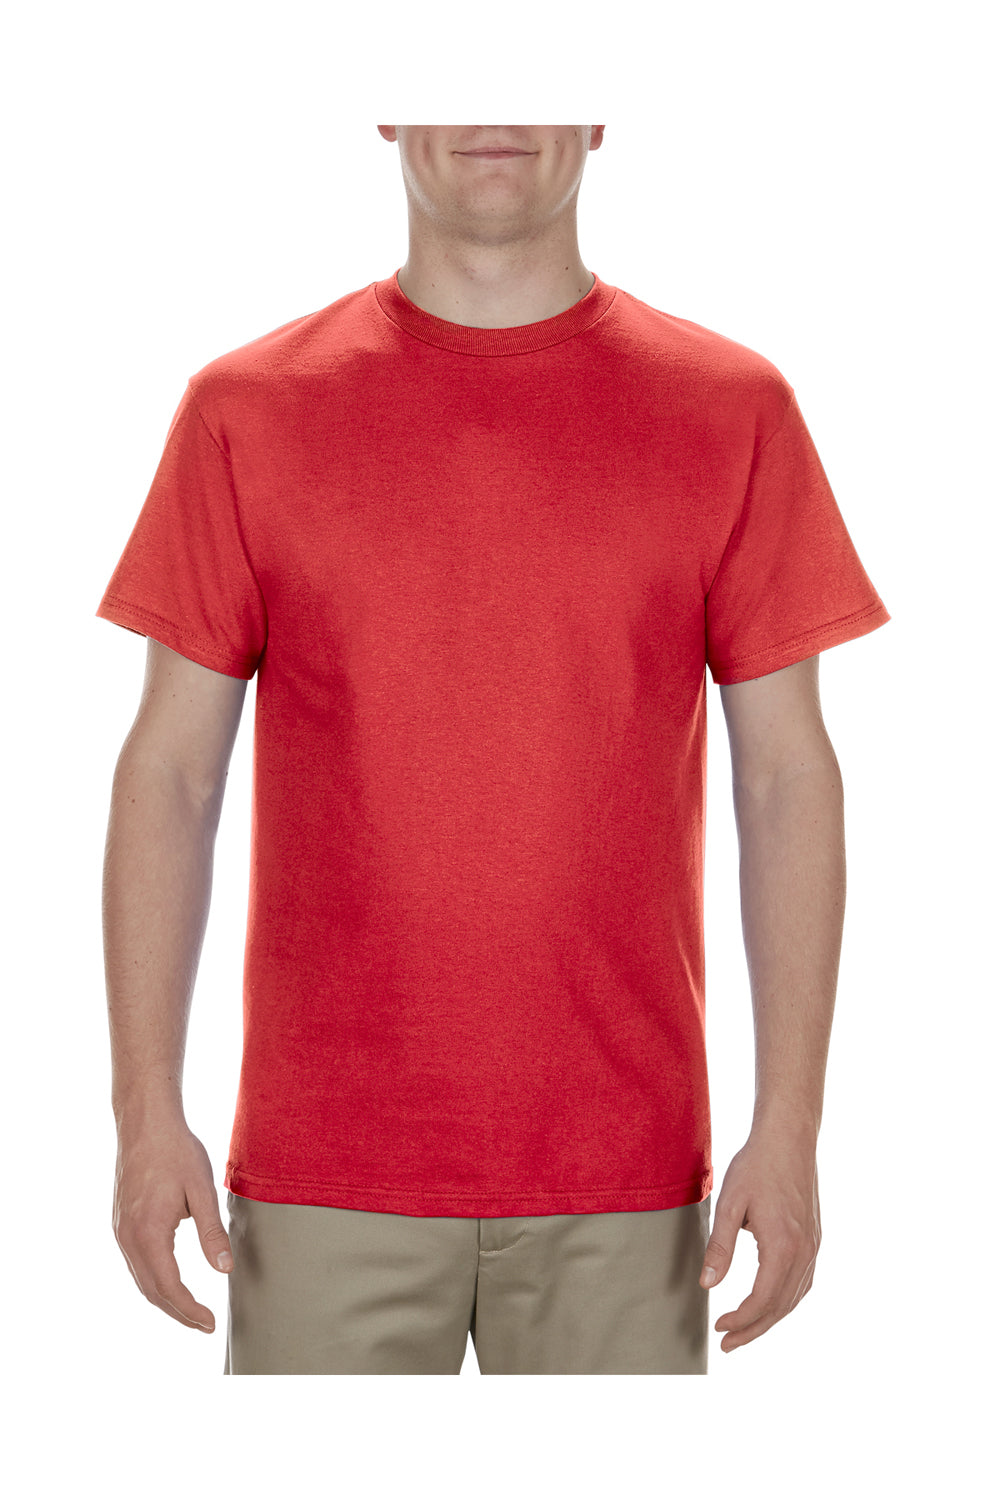 Alstyle AL1901 Mens Short Sleeve Crewneck T-Shirt Red Front